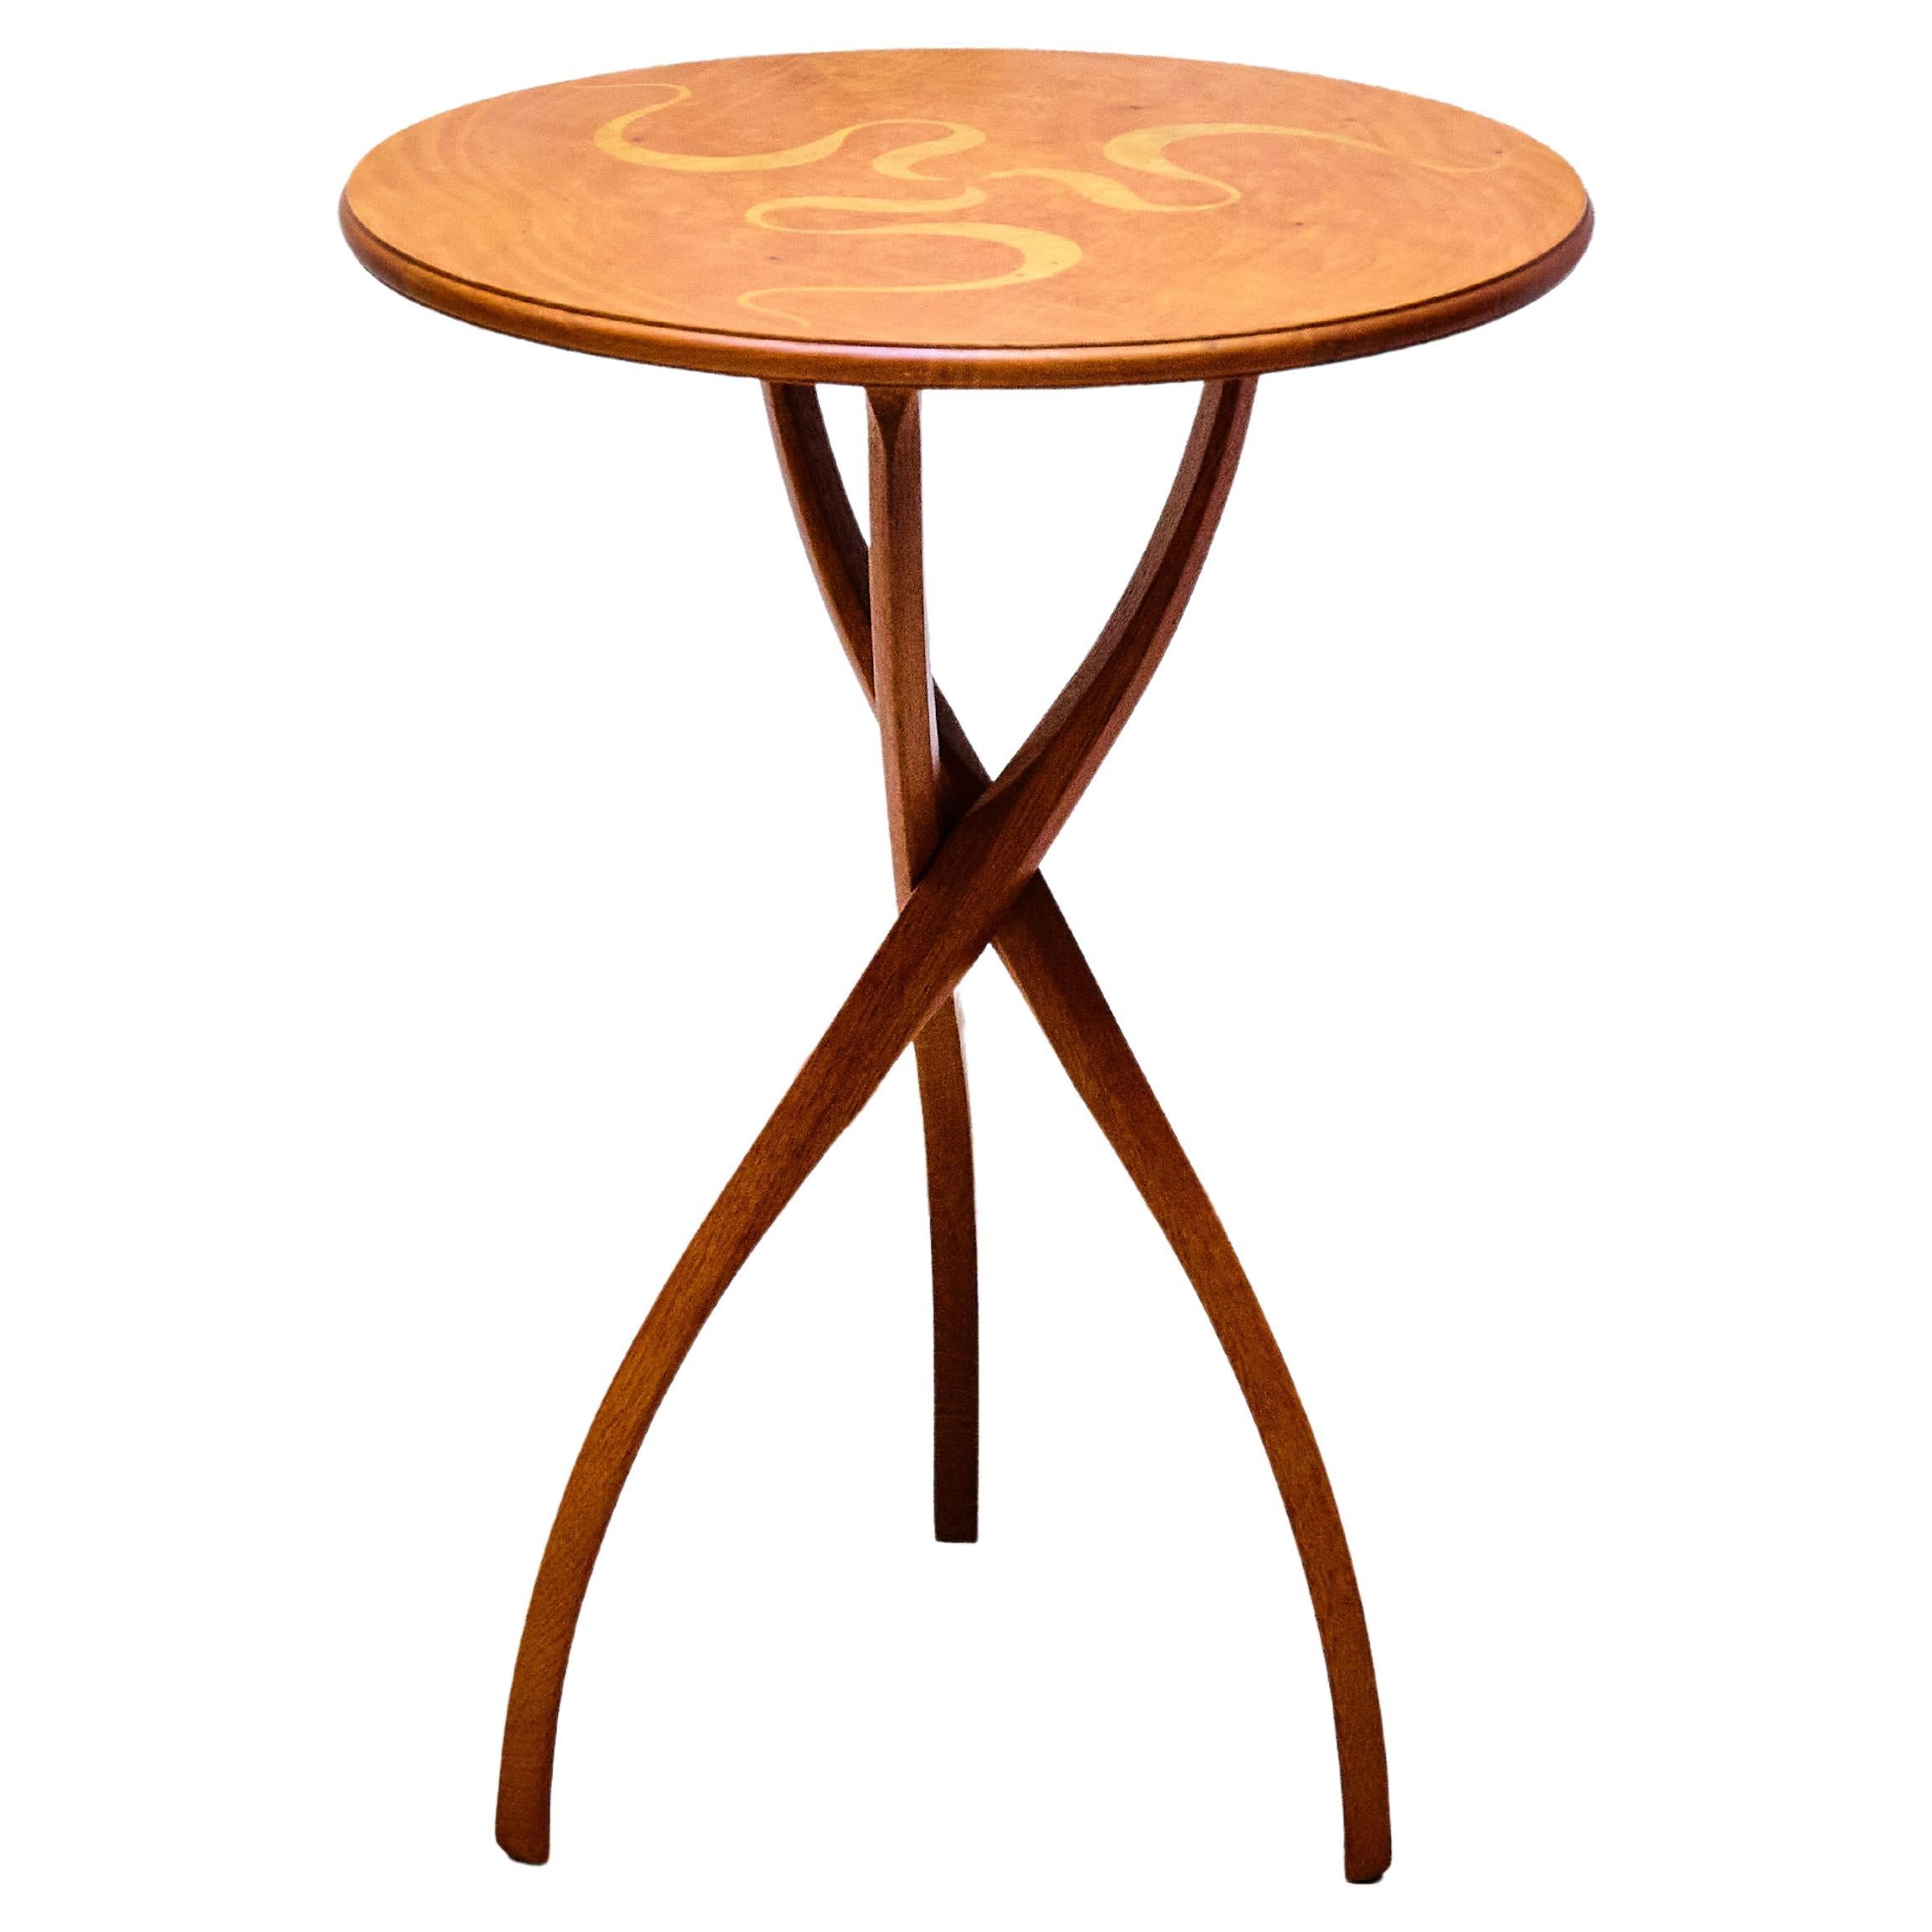 Oscar Tusquets Wood Side Table 'Vortice' for Carlos Jané, circa 1989